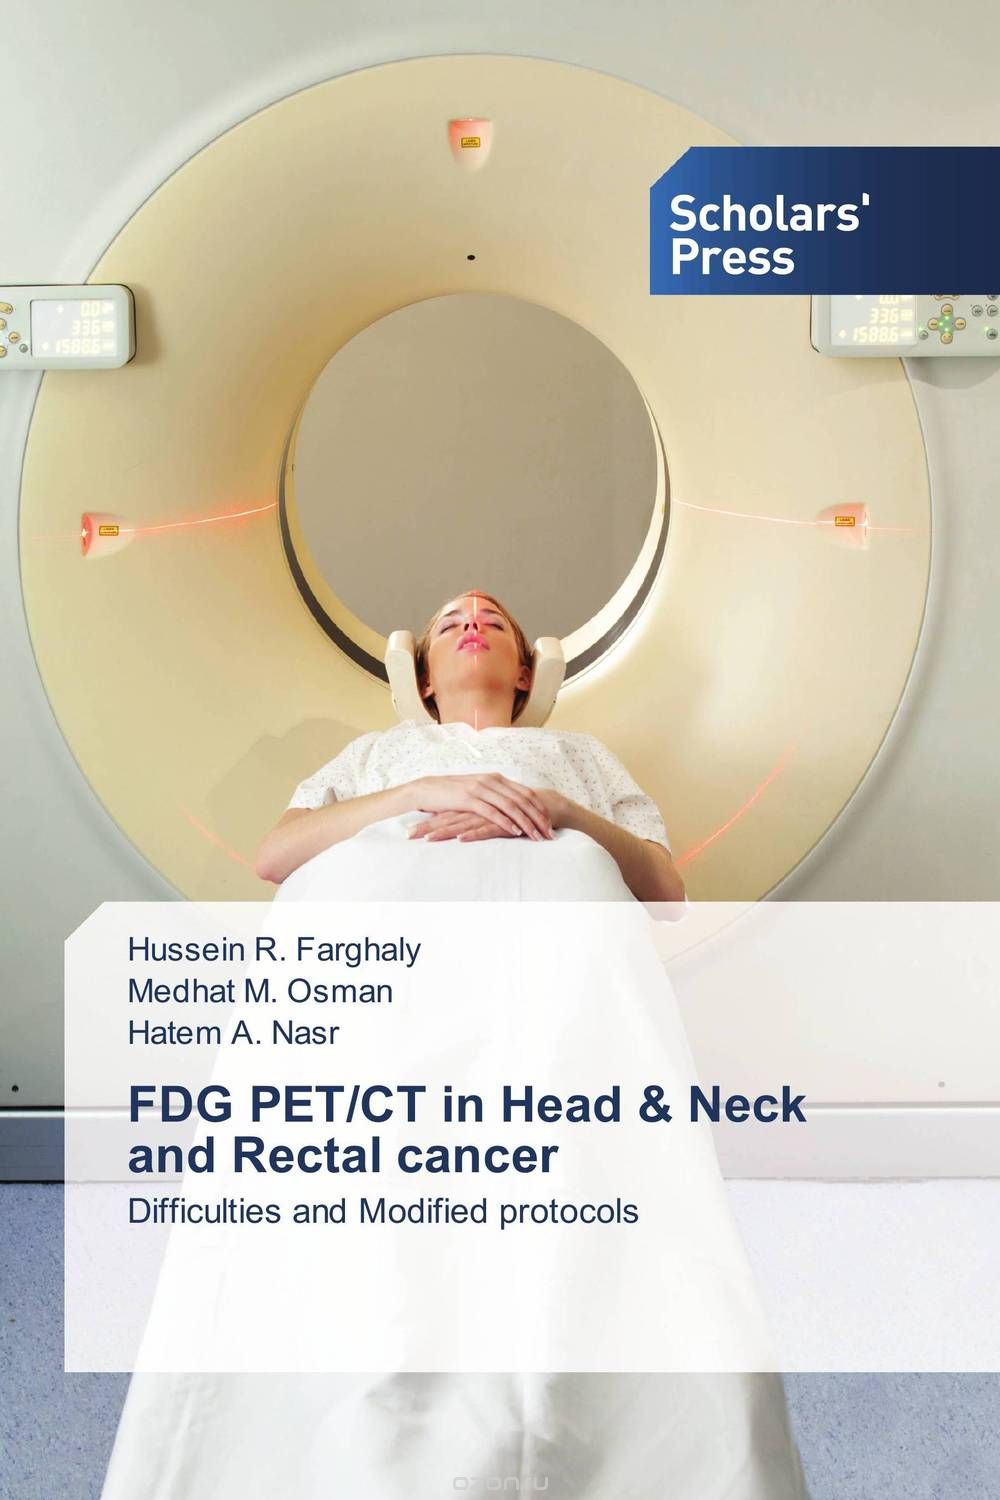 Скачать книгу "FDG PET/CT in Head & Neck and Rectal cancer"